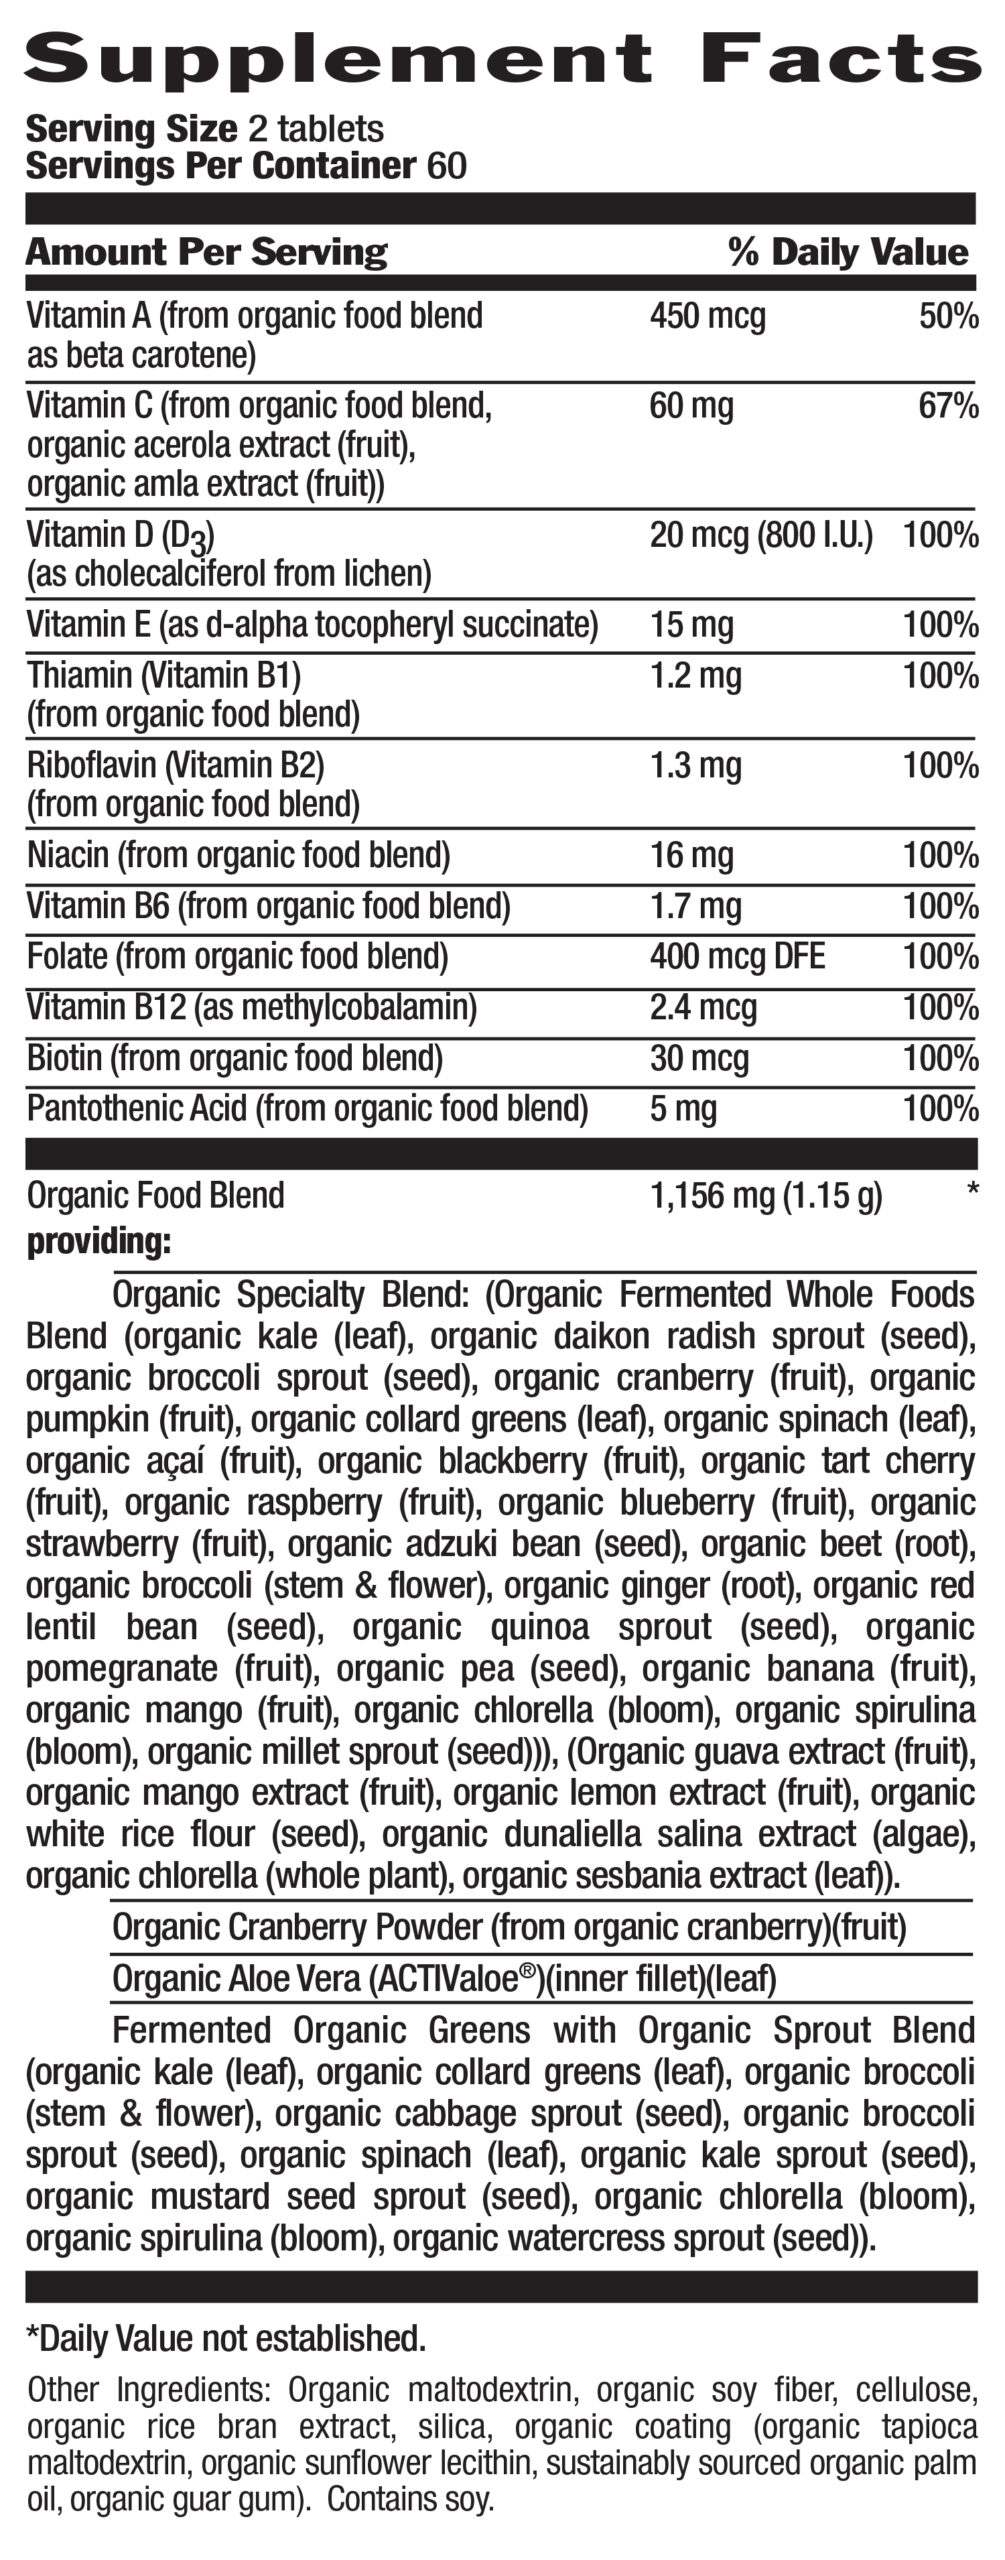 Realfood Organics® For Women